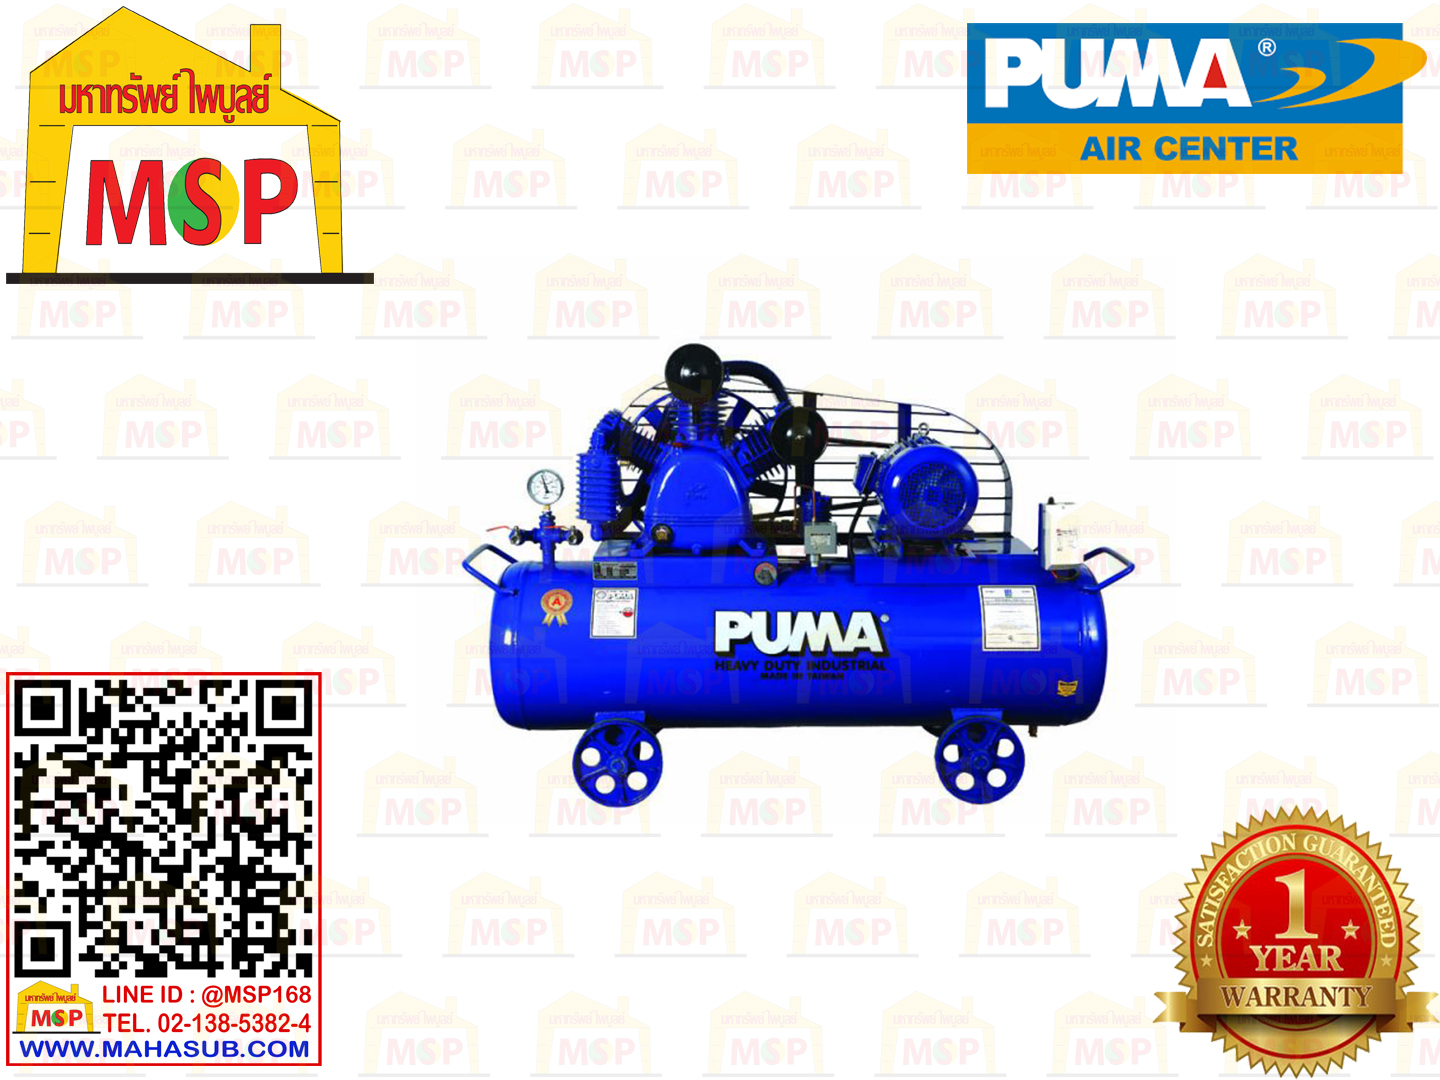 Puma เฉพาะ ถังปั๊มลมพร้อมหัวปั๊ม TPP-100 10HP 3ลูกสูบ 315L 14BAR TWO STAGE ไม่รวมมอเตอร์